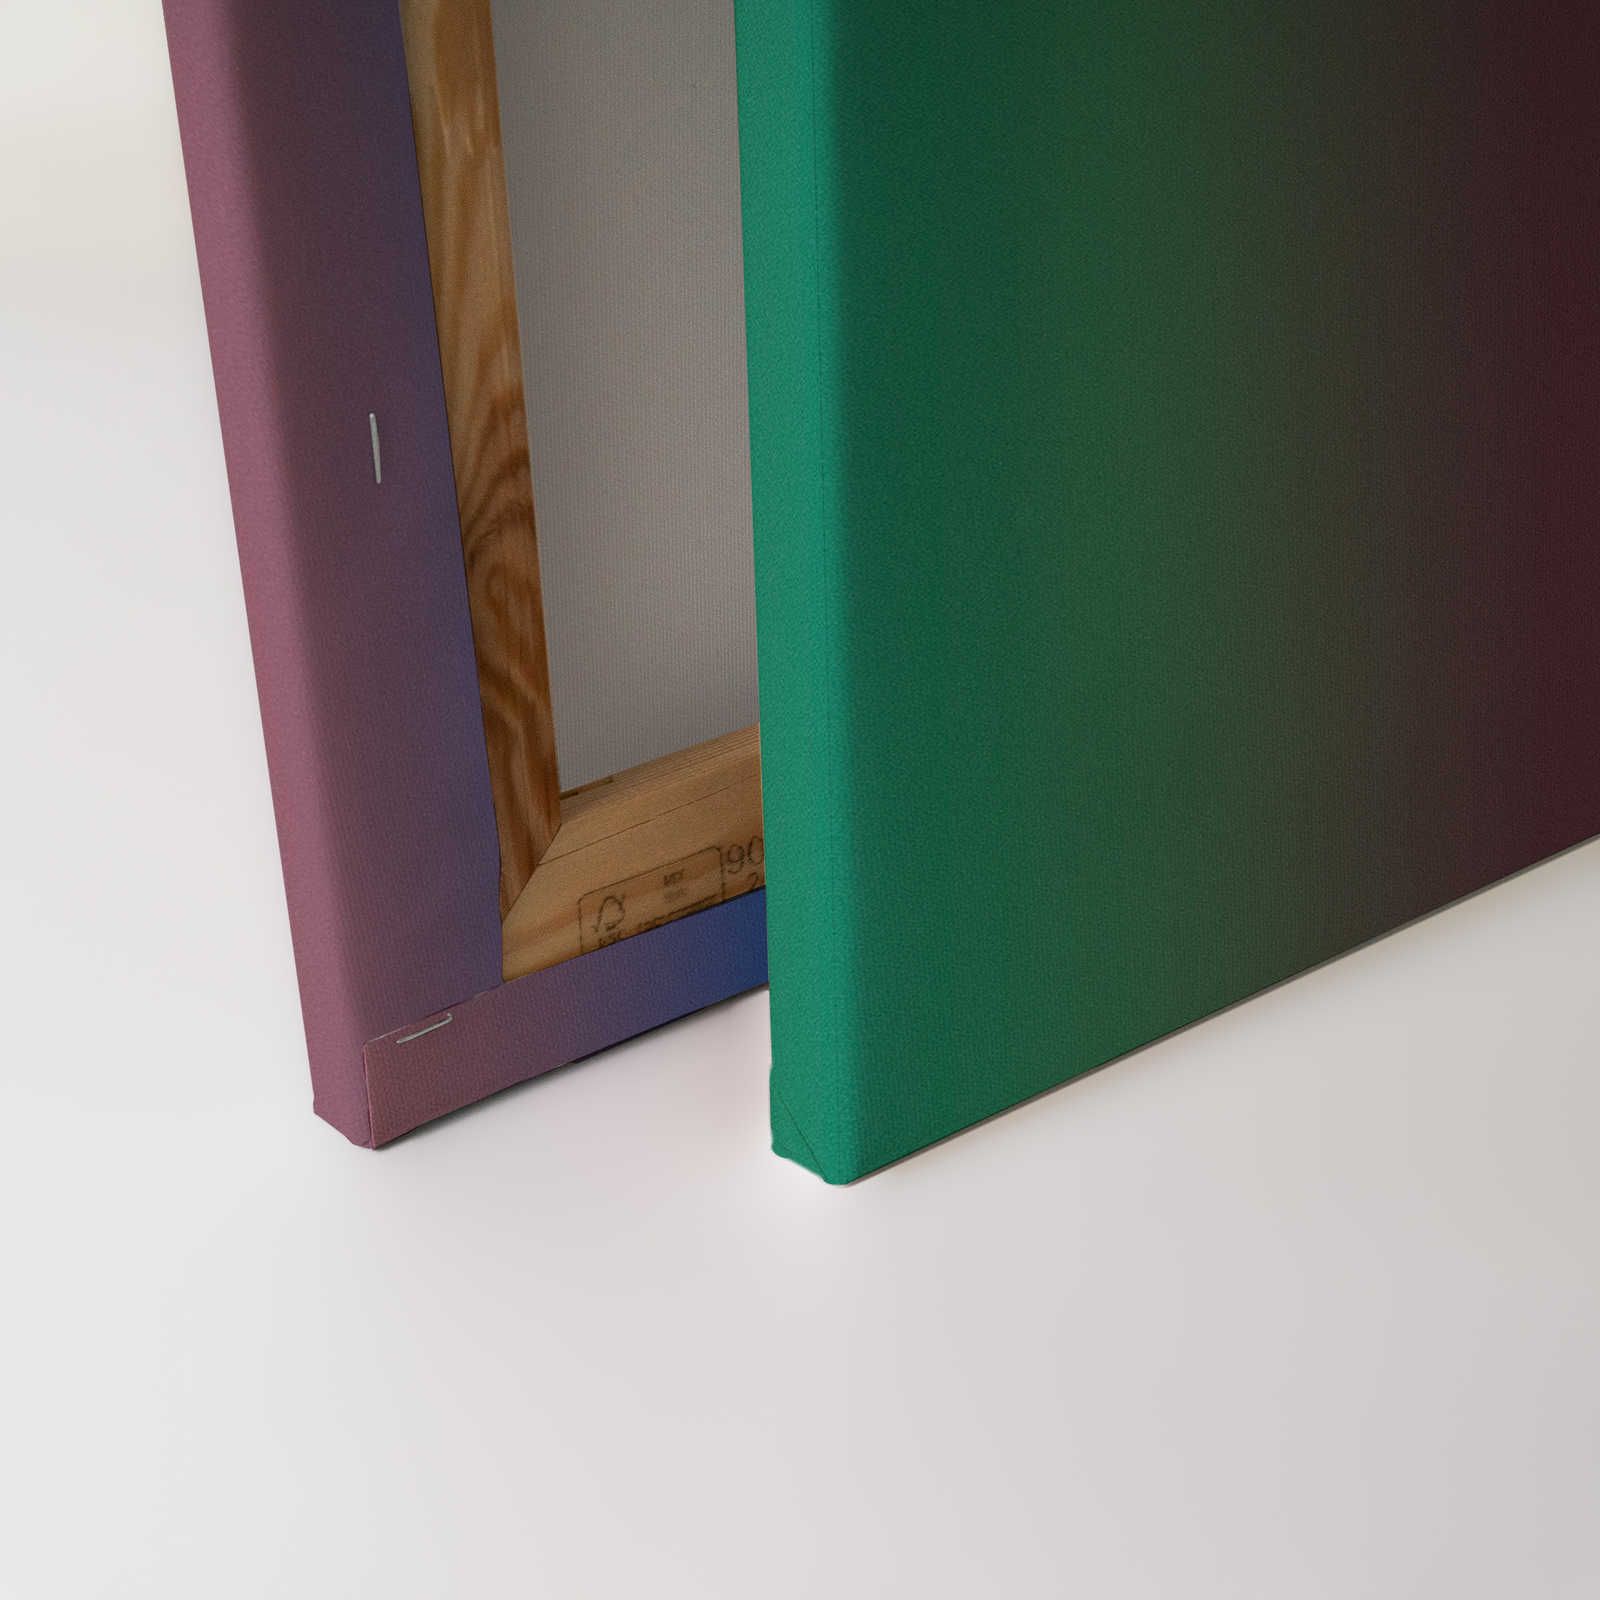             Over the Rainbow 2 - Farbverlauf Leinwandbild buntes Streifendesign – 0,90 m x 0,60 m
        